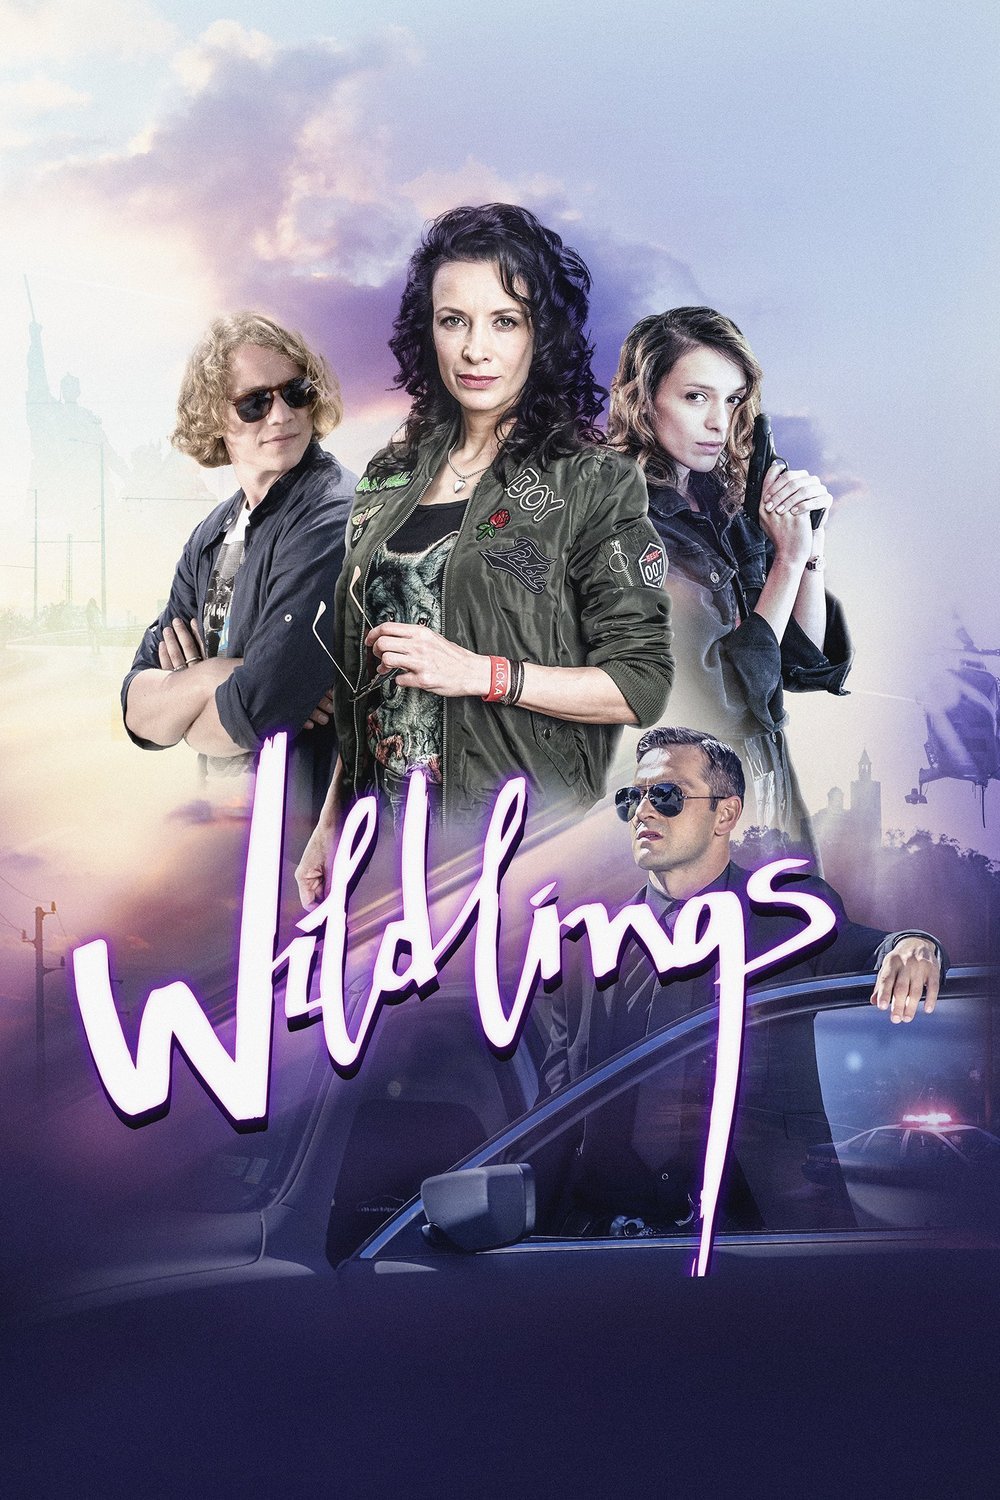 Poster of the movie Wildlings